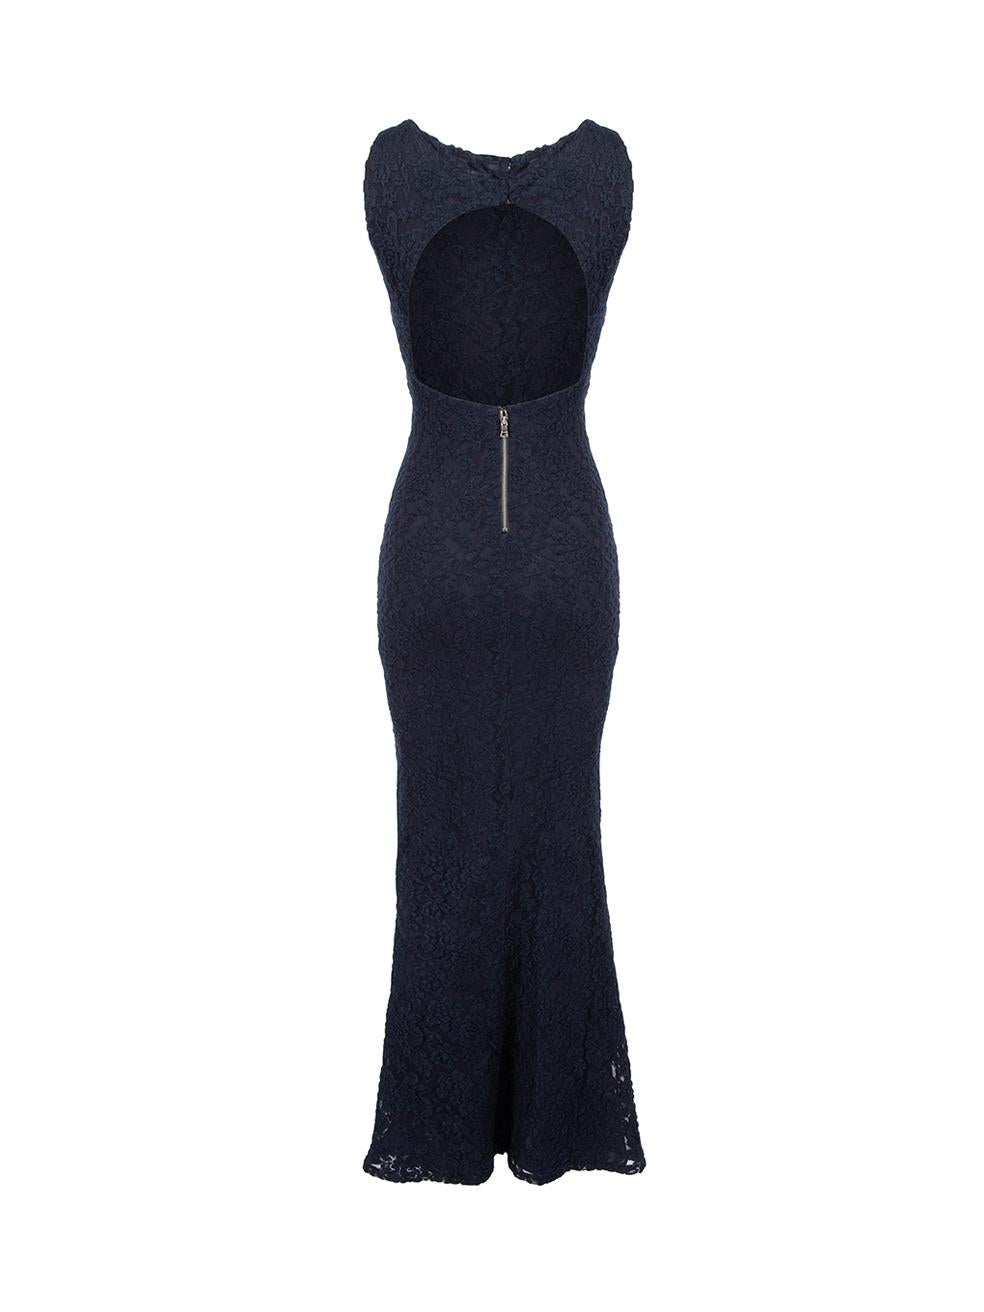 Black Alice + Olivia Navy Floral Lace Open Back Maxi Dress Size XS